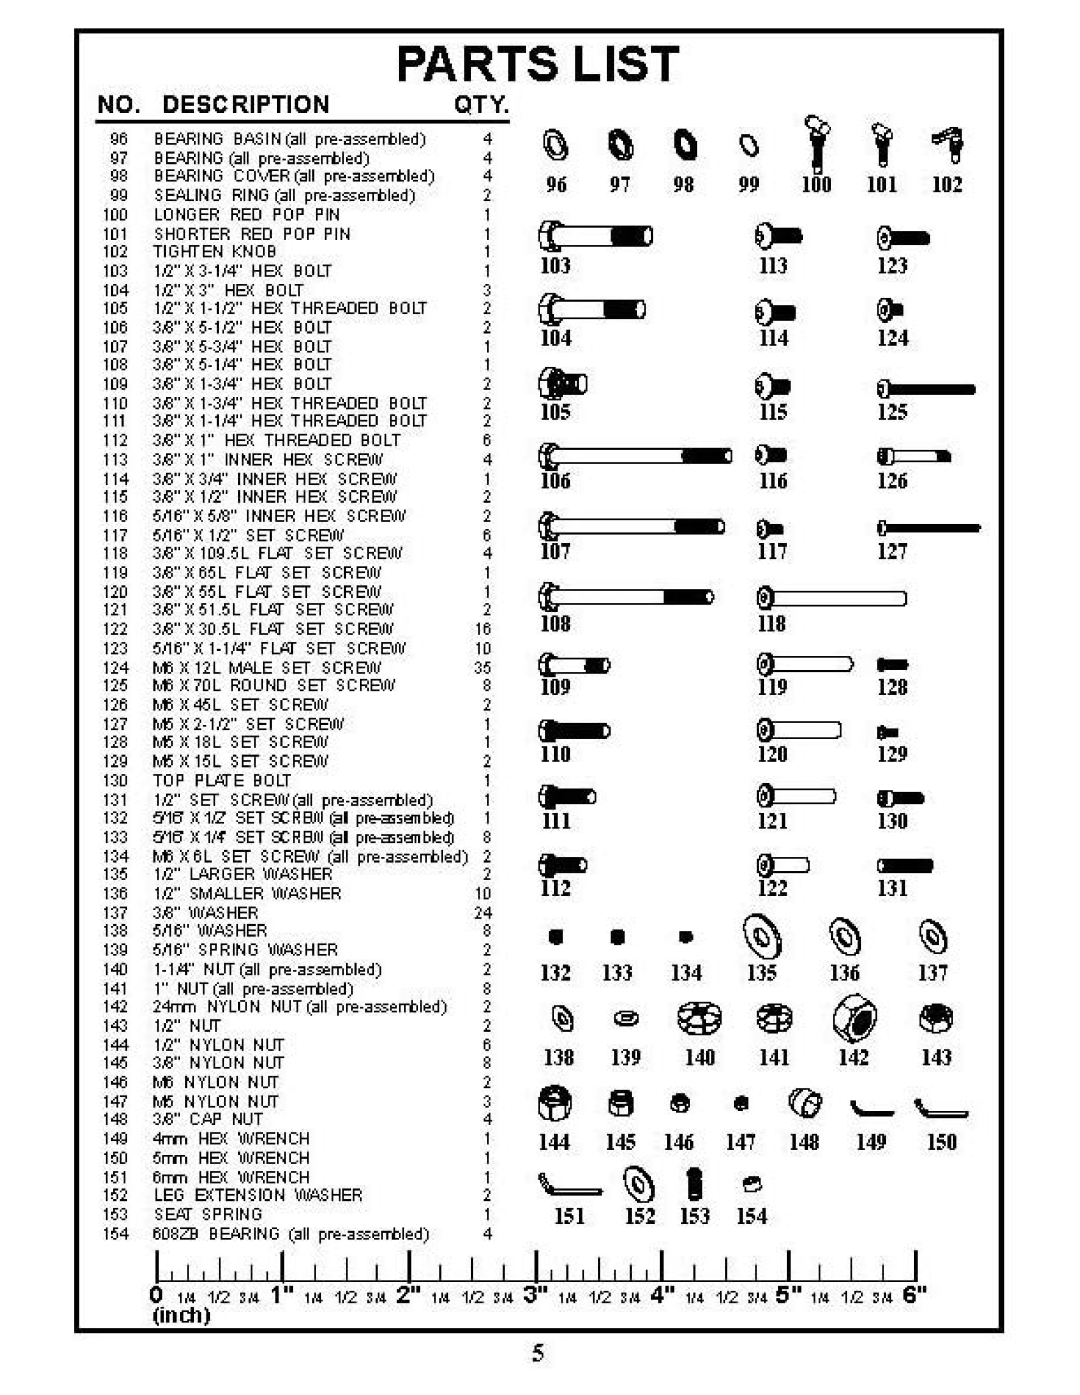 BodyCraft GXP manual ~ ill, EIlhJ, a.,· HEJ, Parts List 